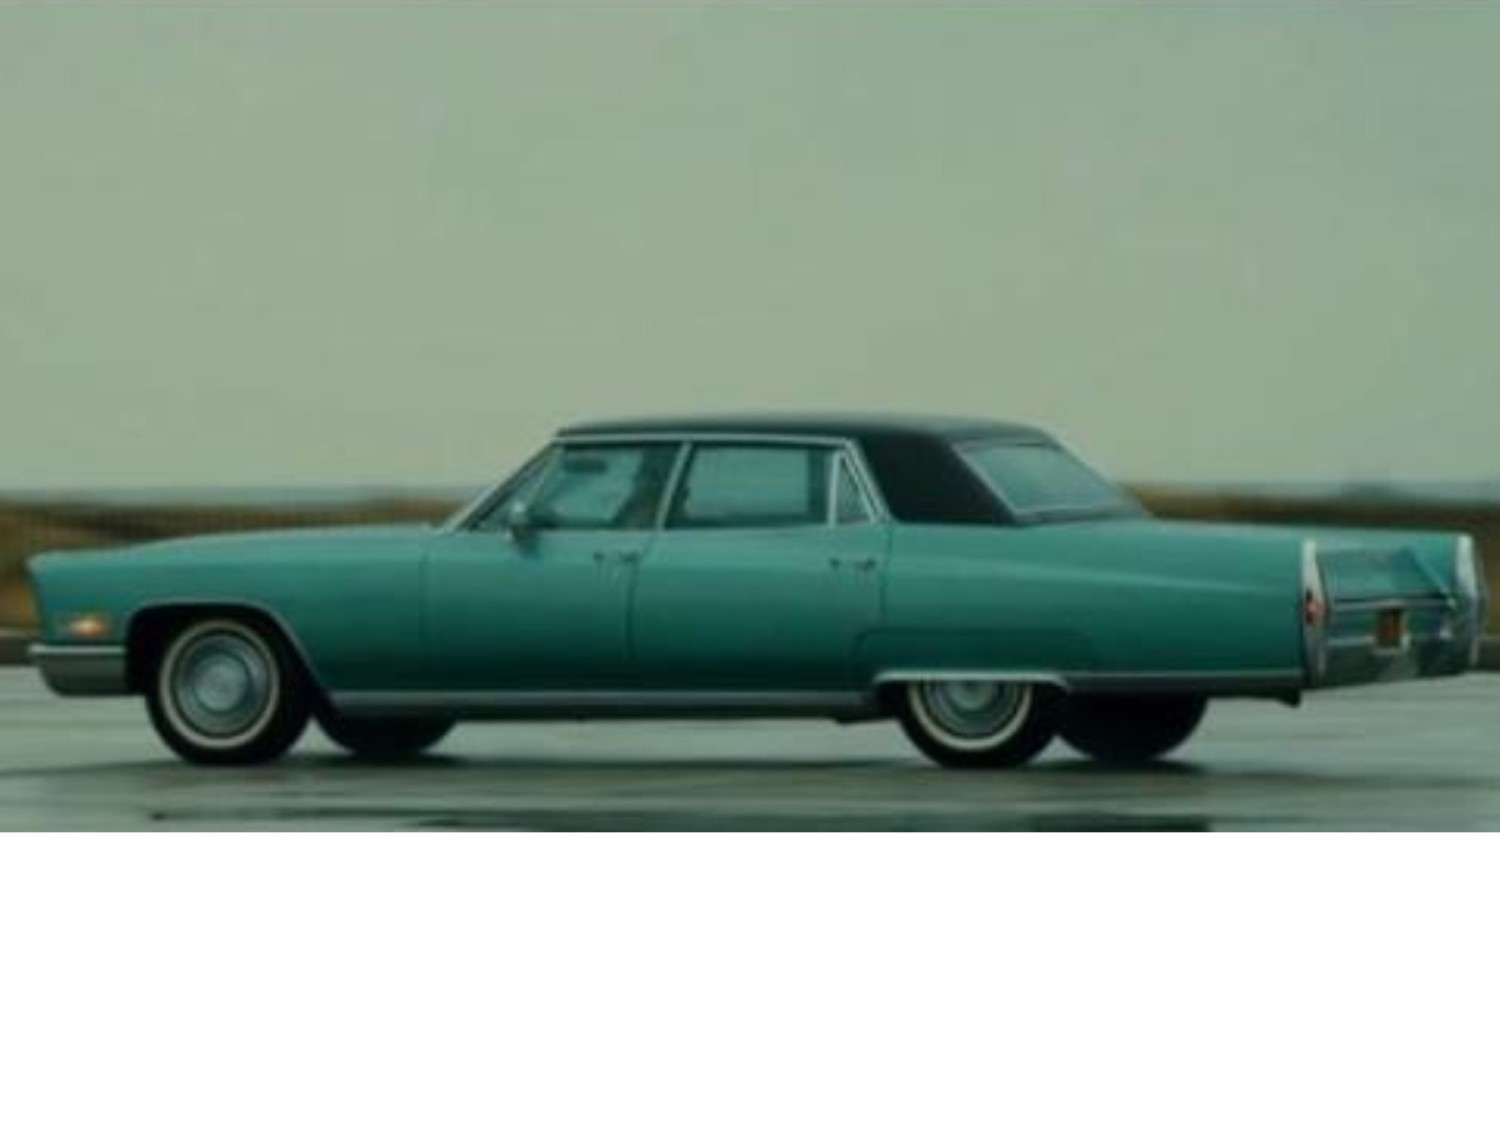 1968 Cadillac Fleetwood brougham